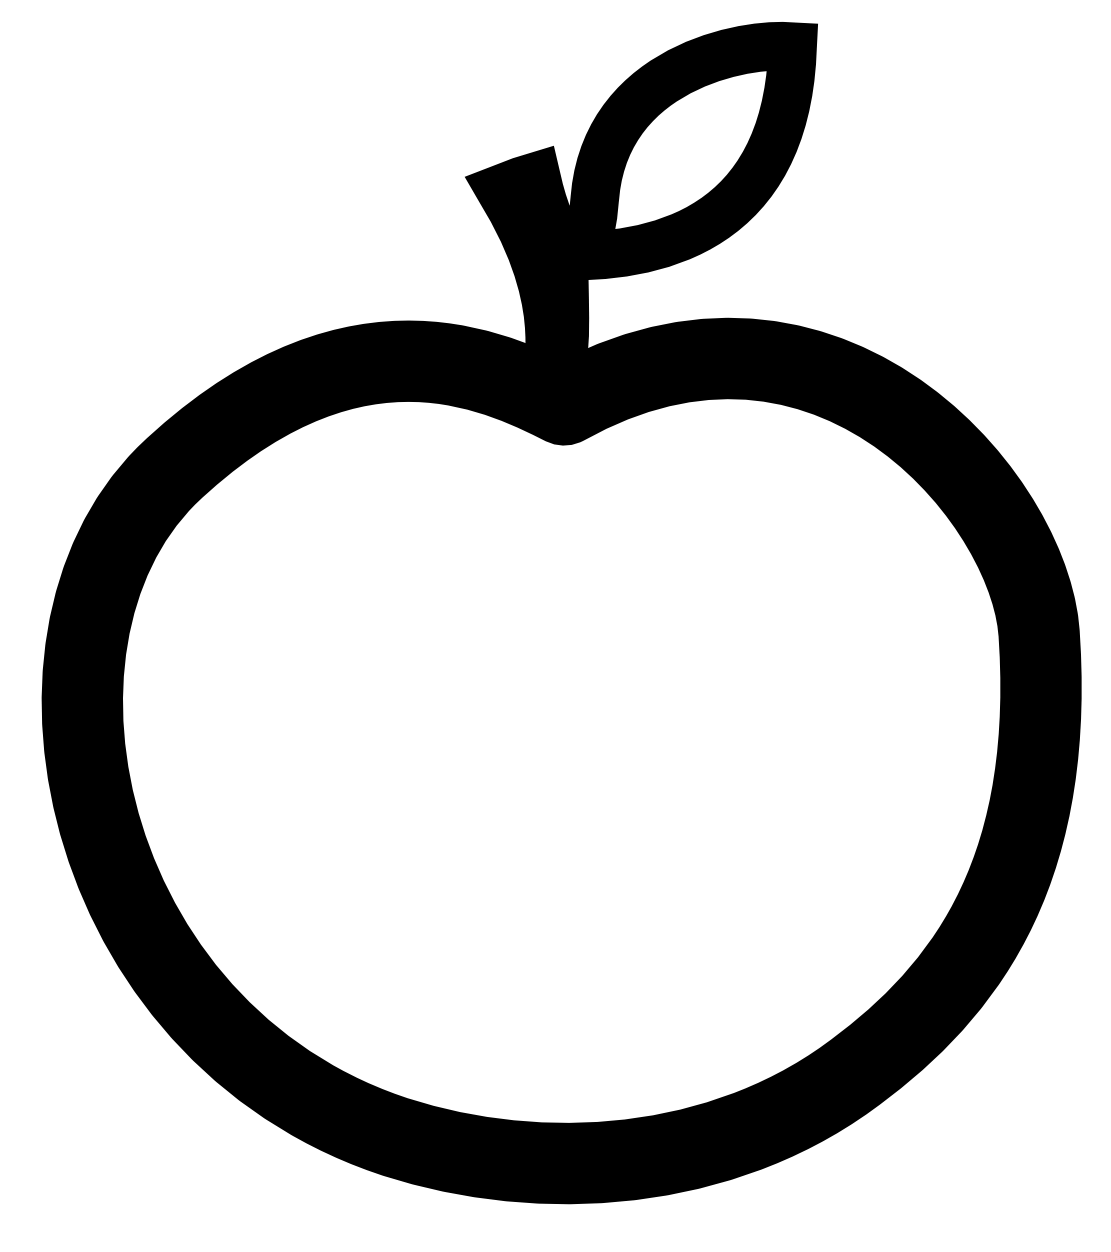 Cute Black and White Logo - Free White Apple Cliparts, Download Free Clip Art, Free Clip Art on ...